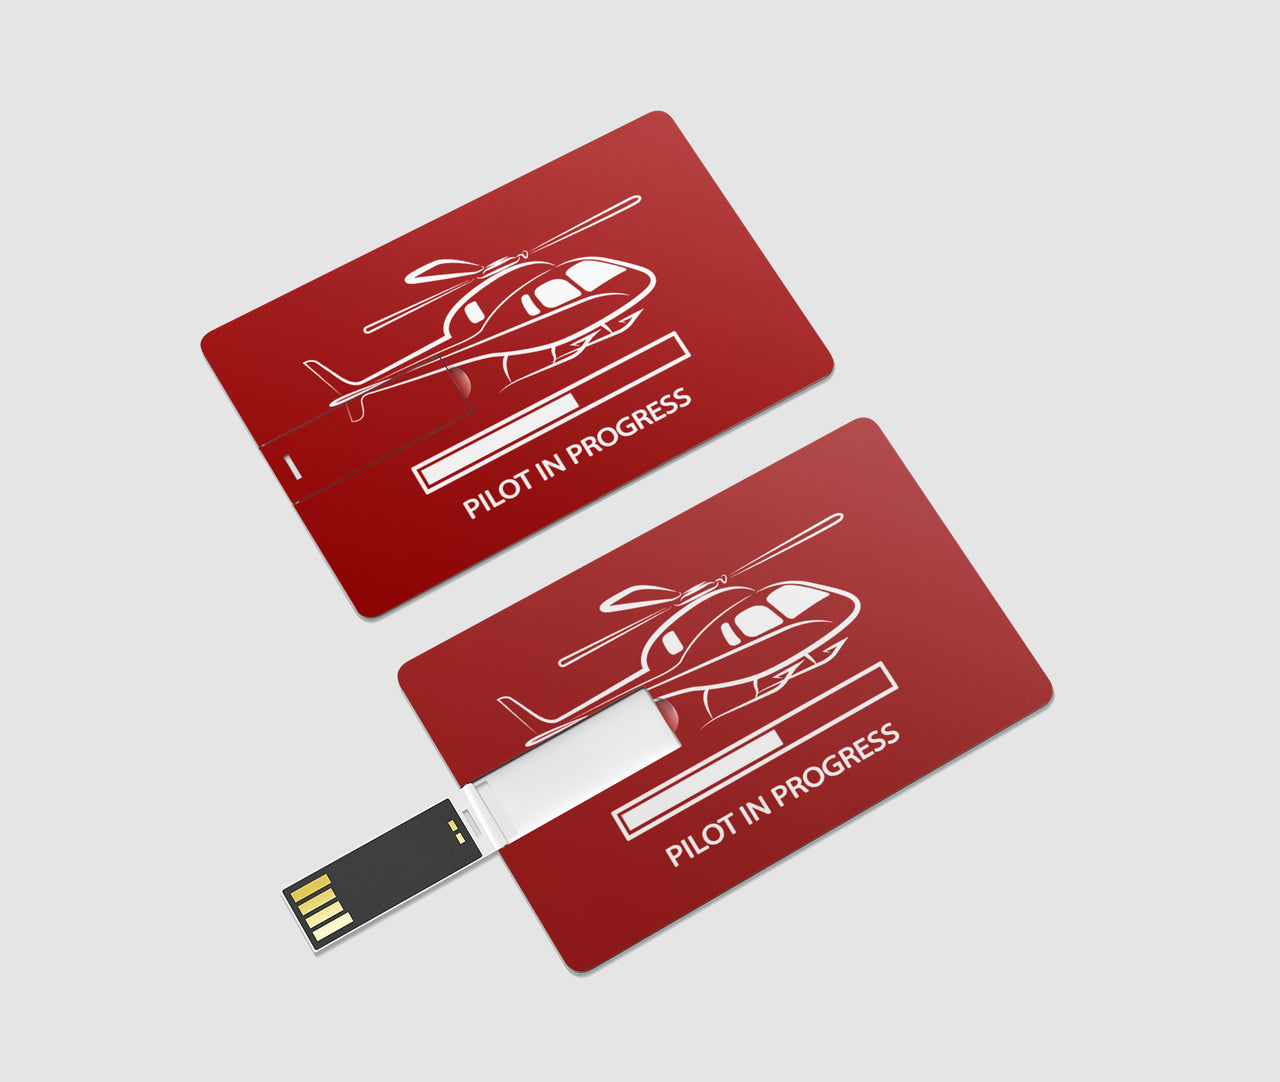 Pilot In Progress (Helicopter) Designed USB Cards